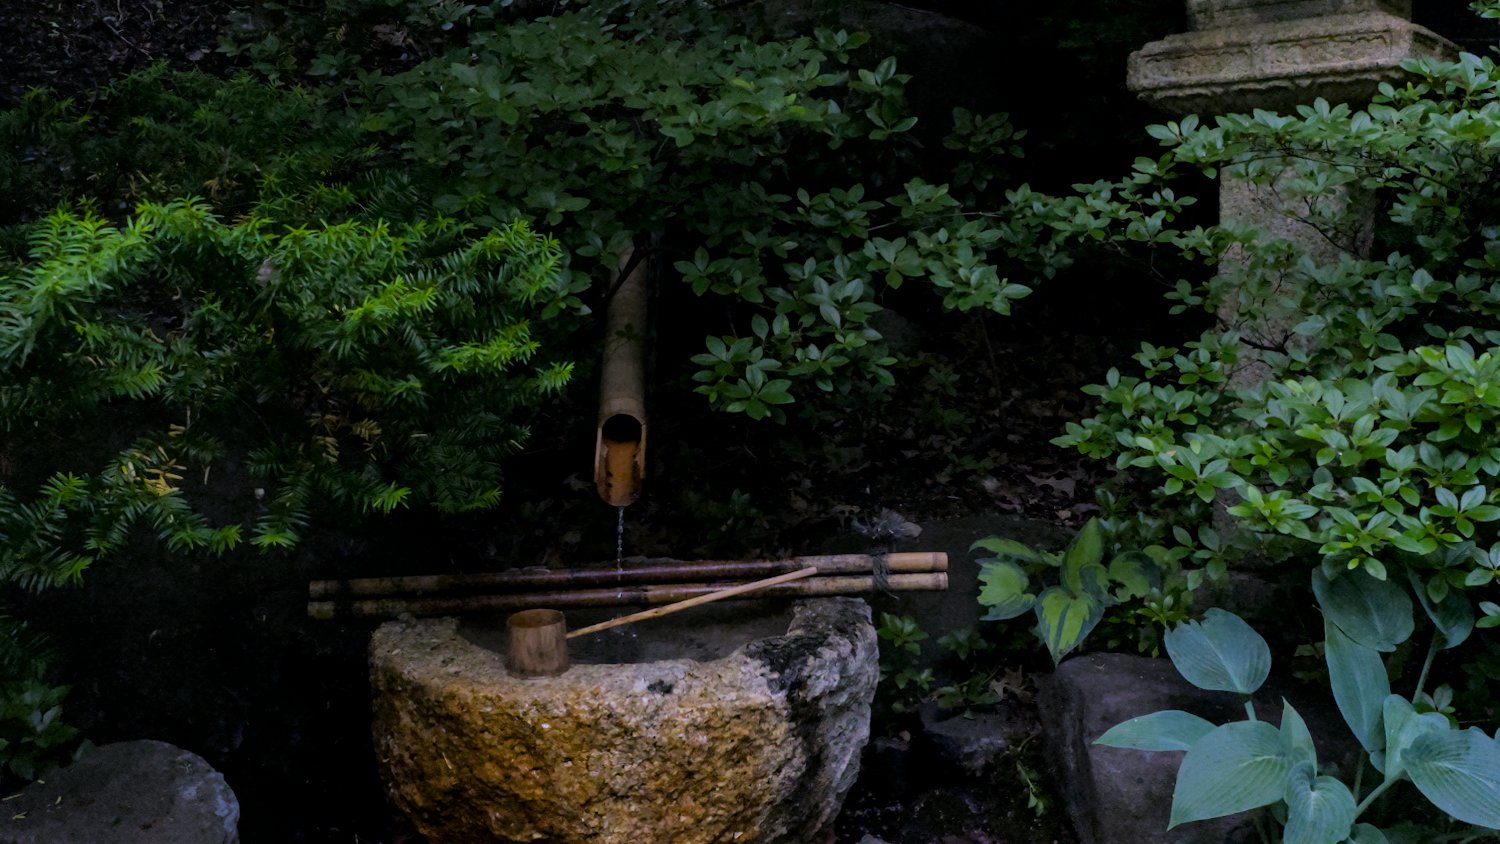 Tea ceremony purification water basin.